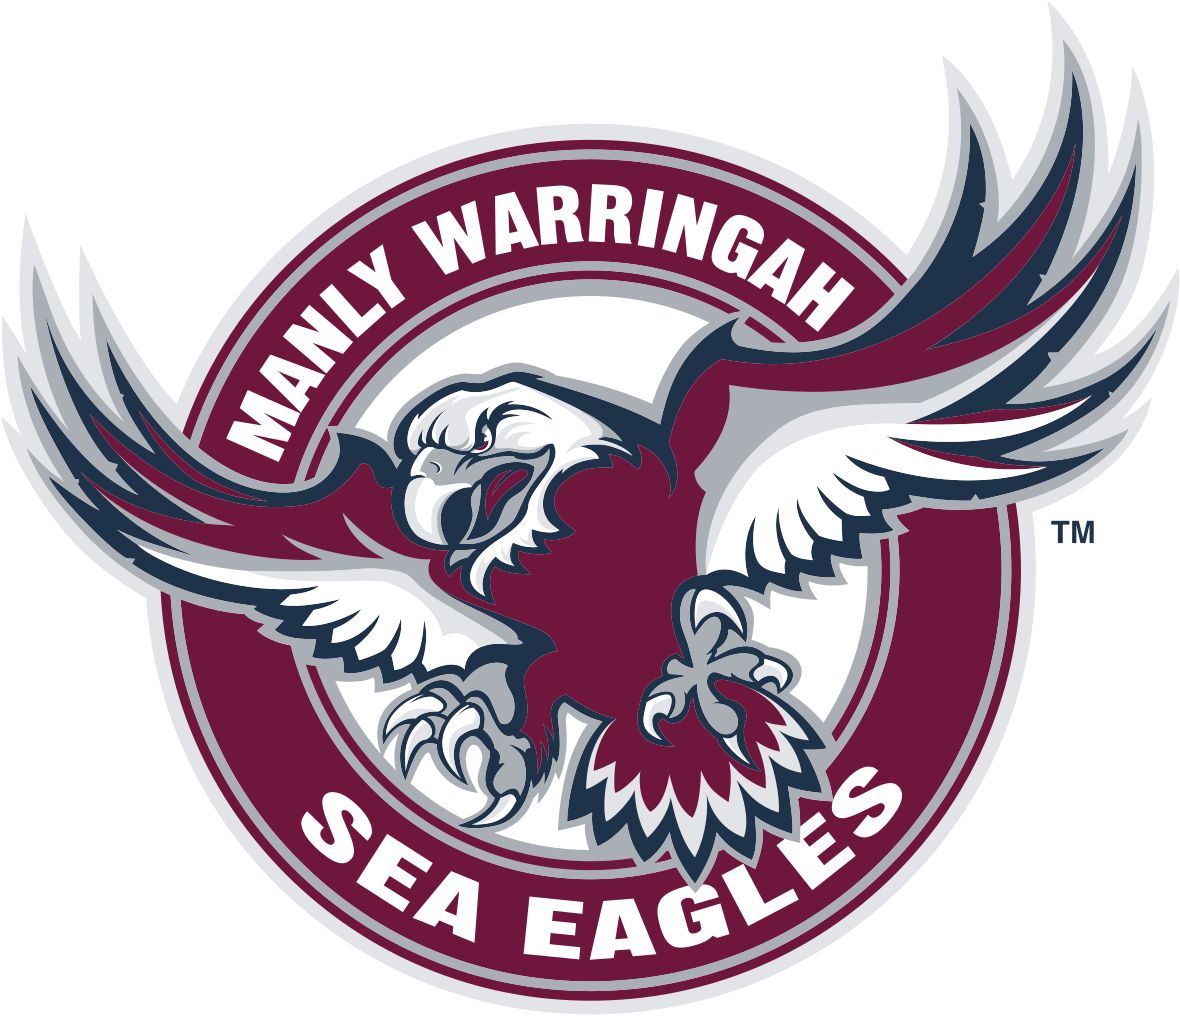 1180px-Manly-Warringah_Sea_Eagles_logo.s